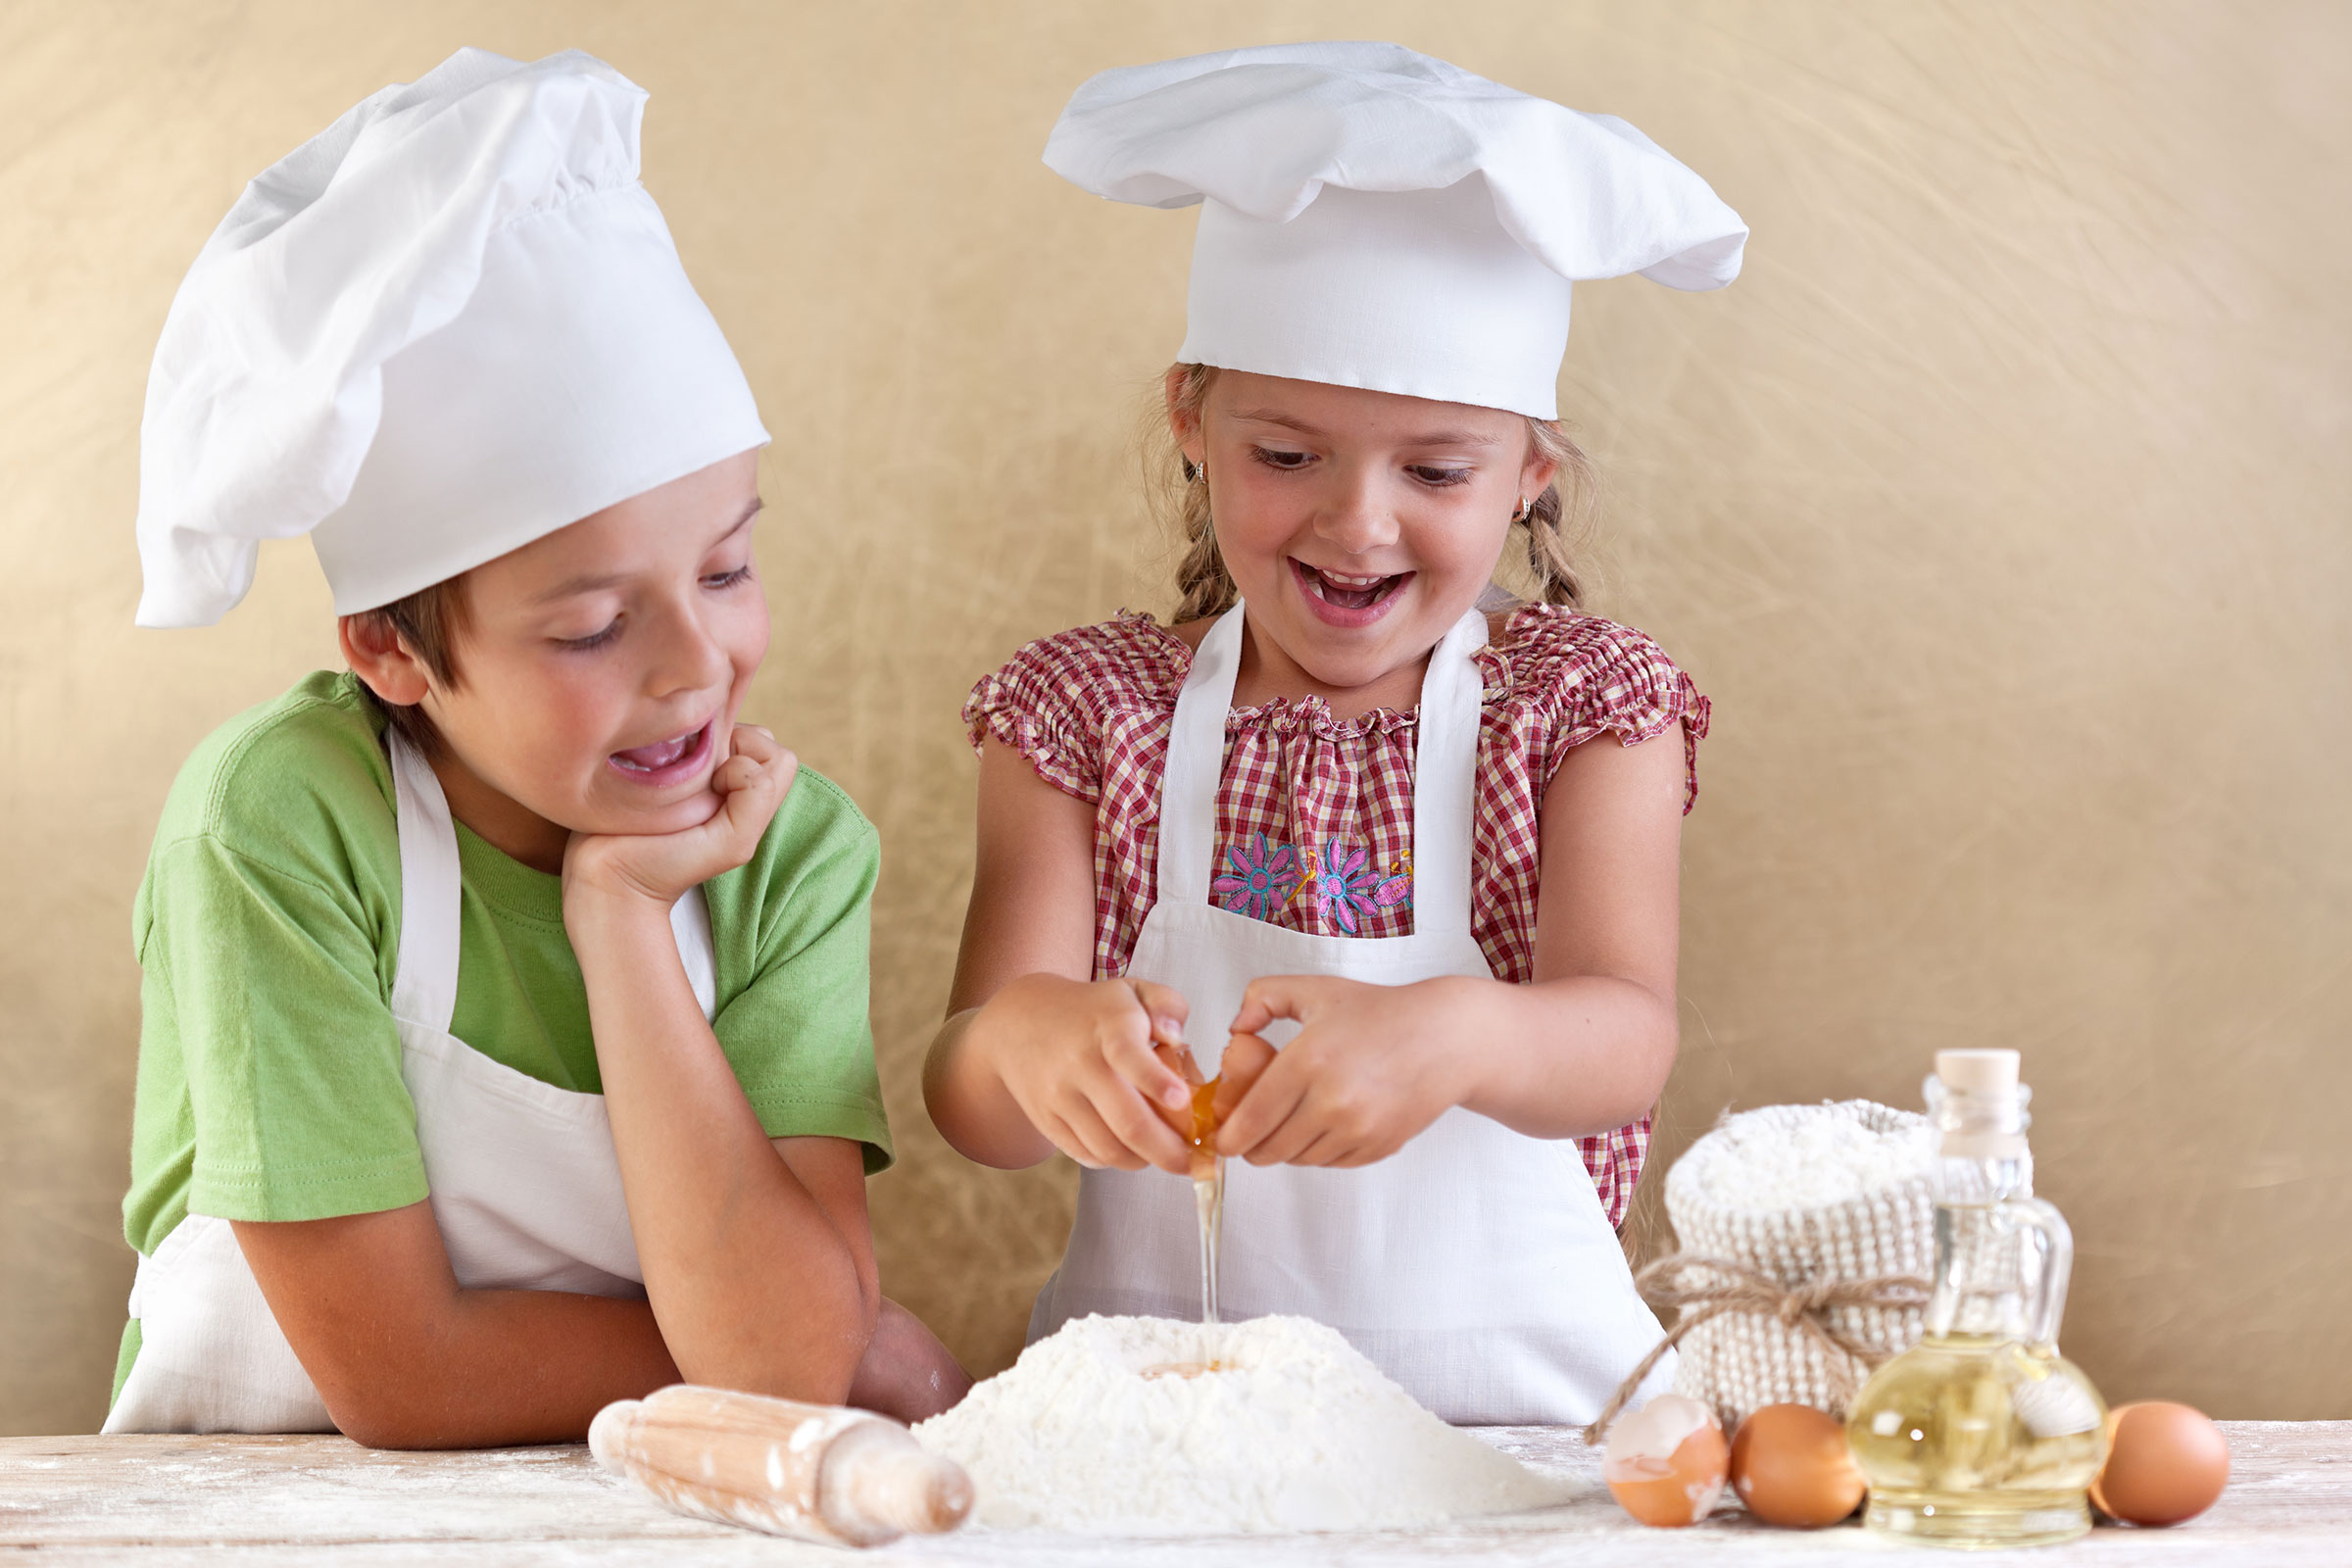 Children in a kitchen working with dough